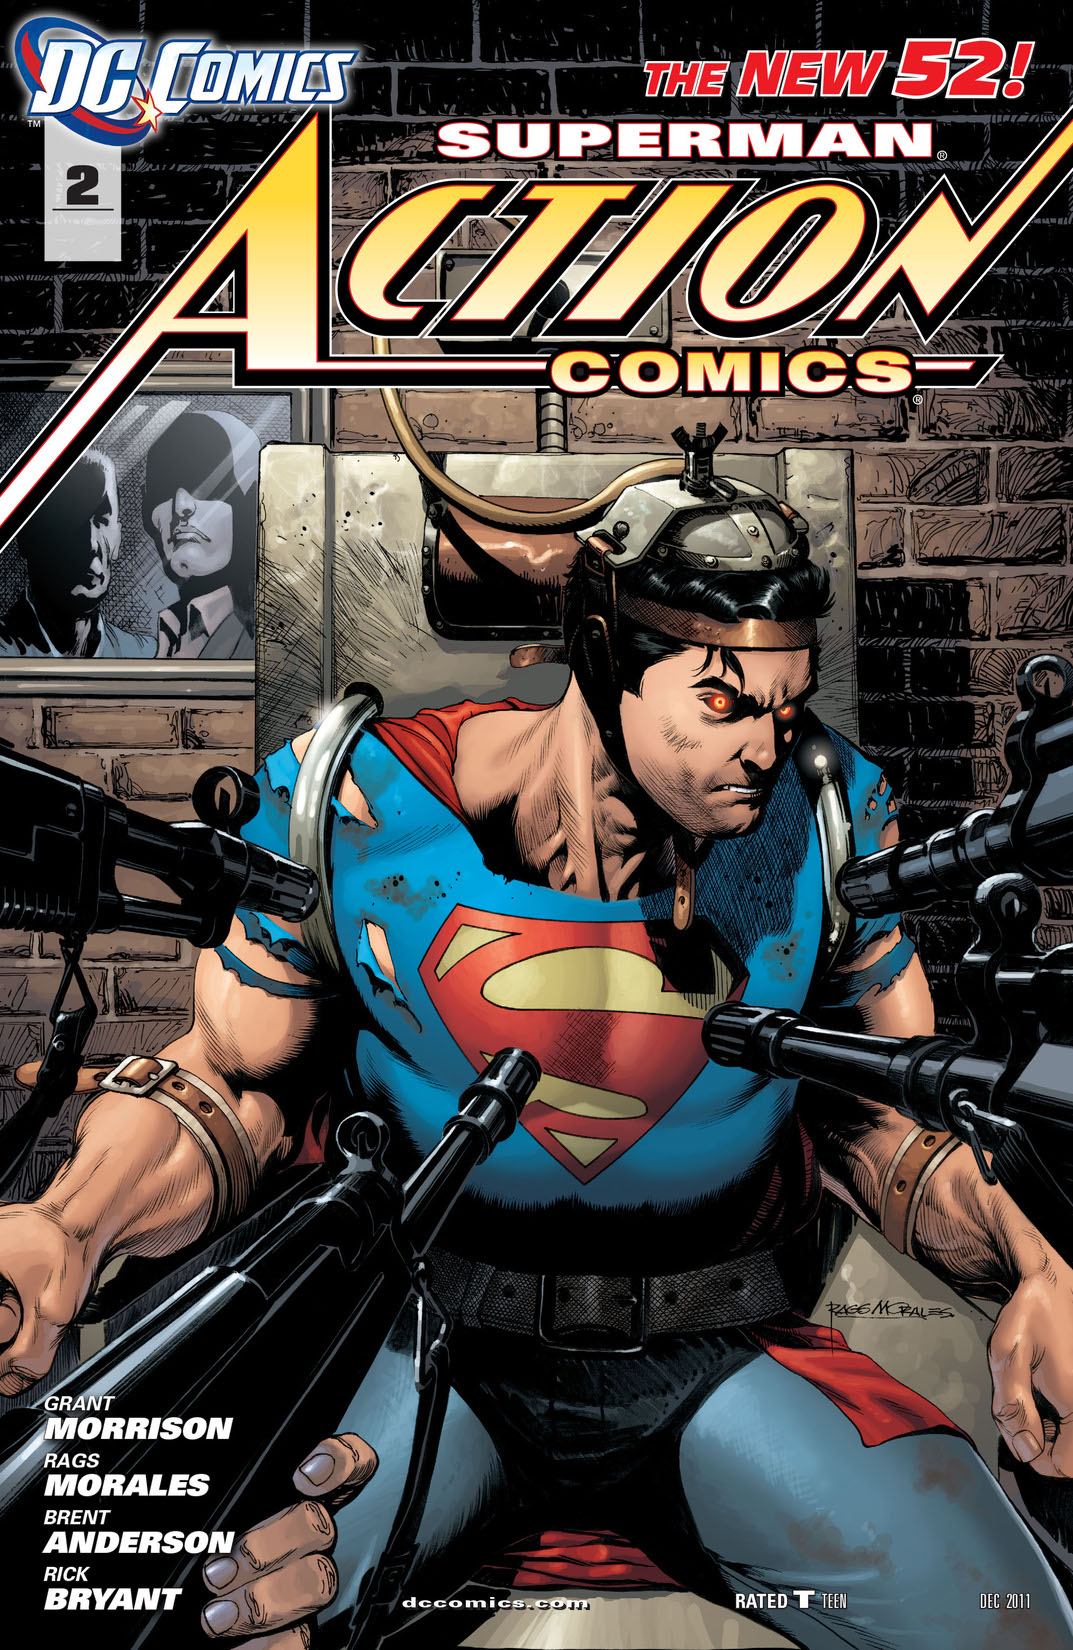 Action Comics (2011-) #2 preview images